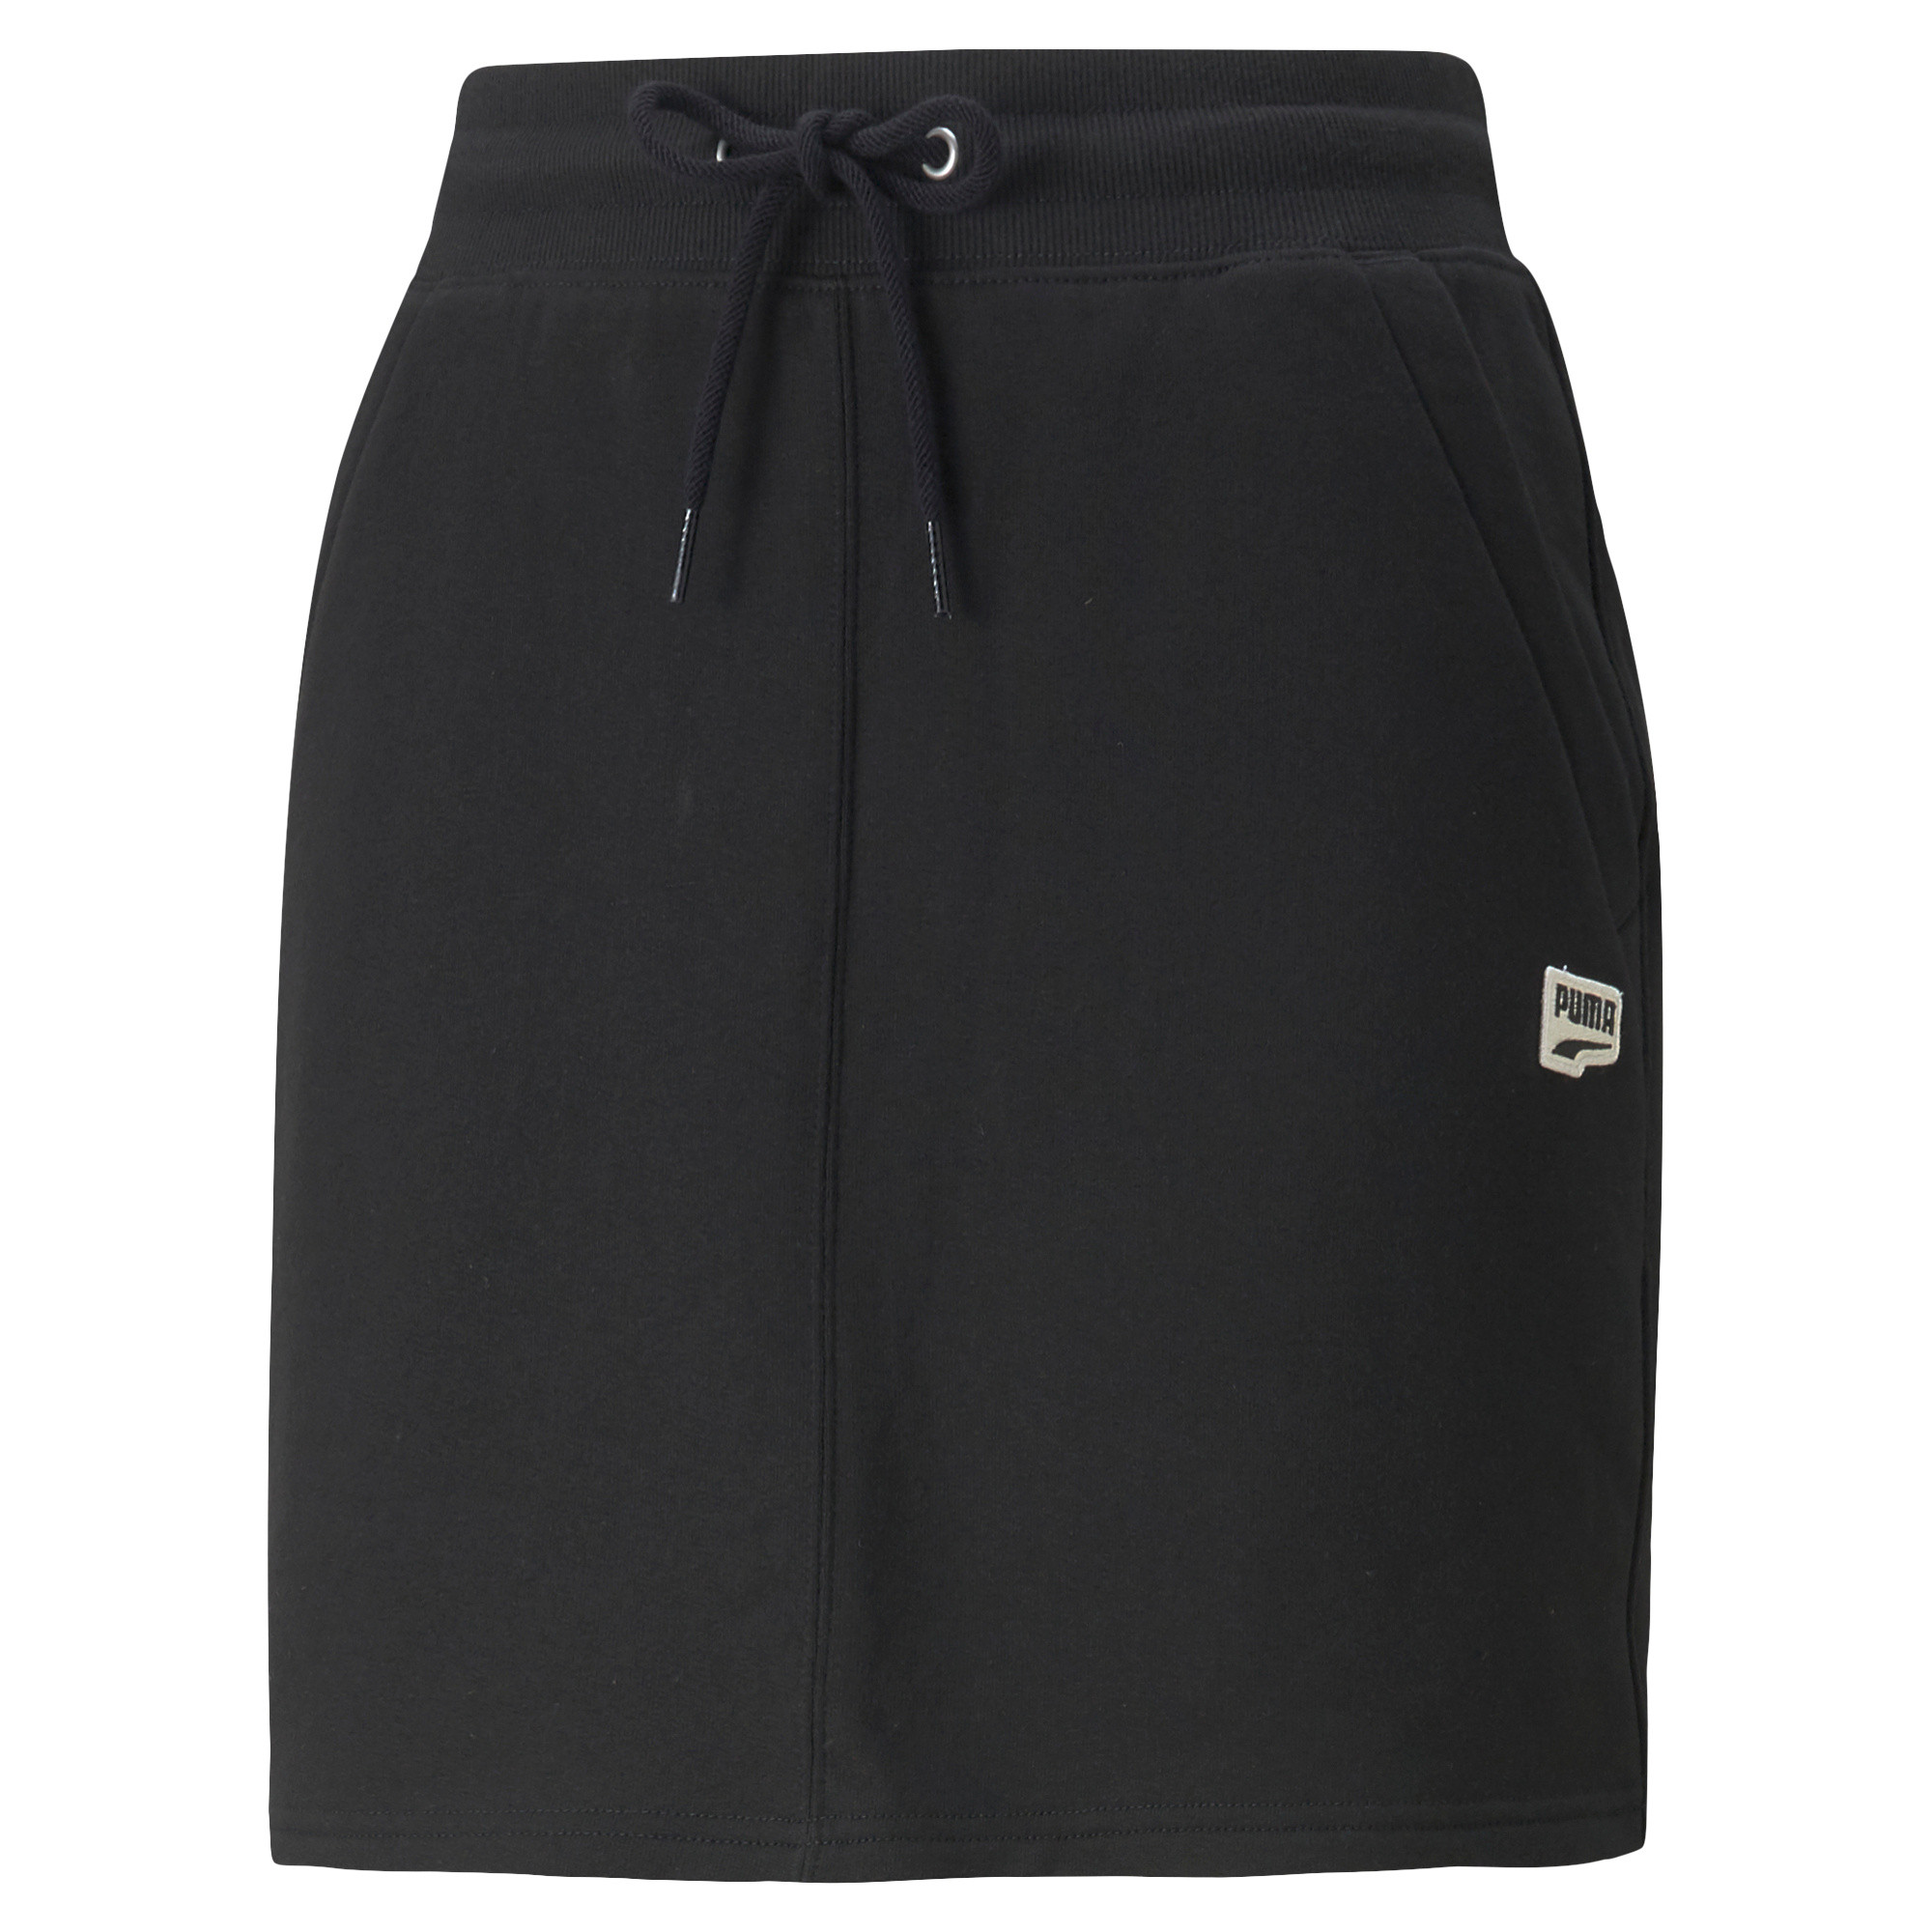 Downtown Skirt, Black, large image number 0